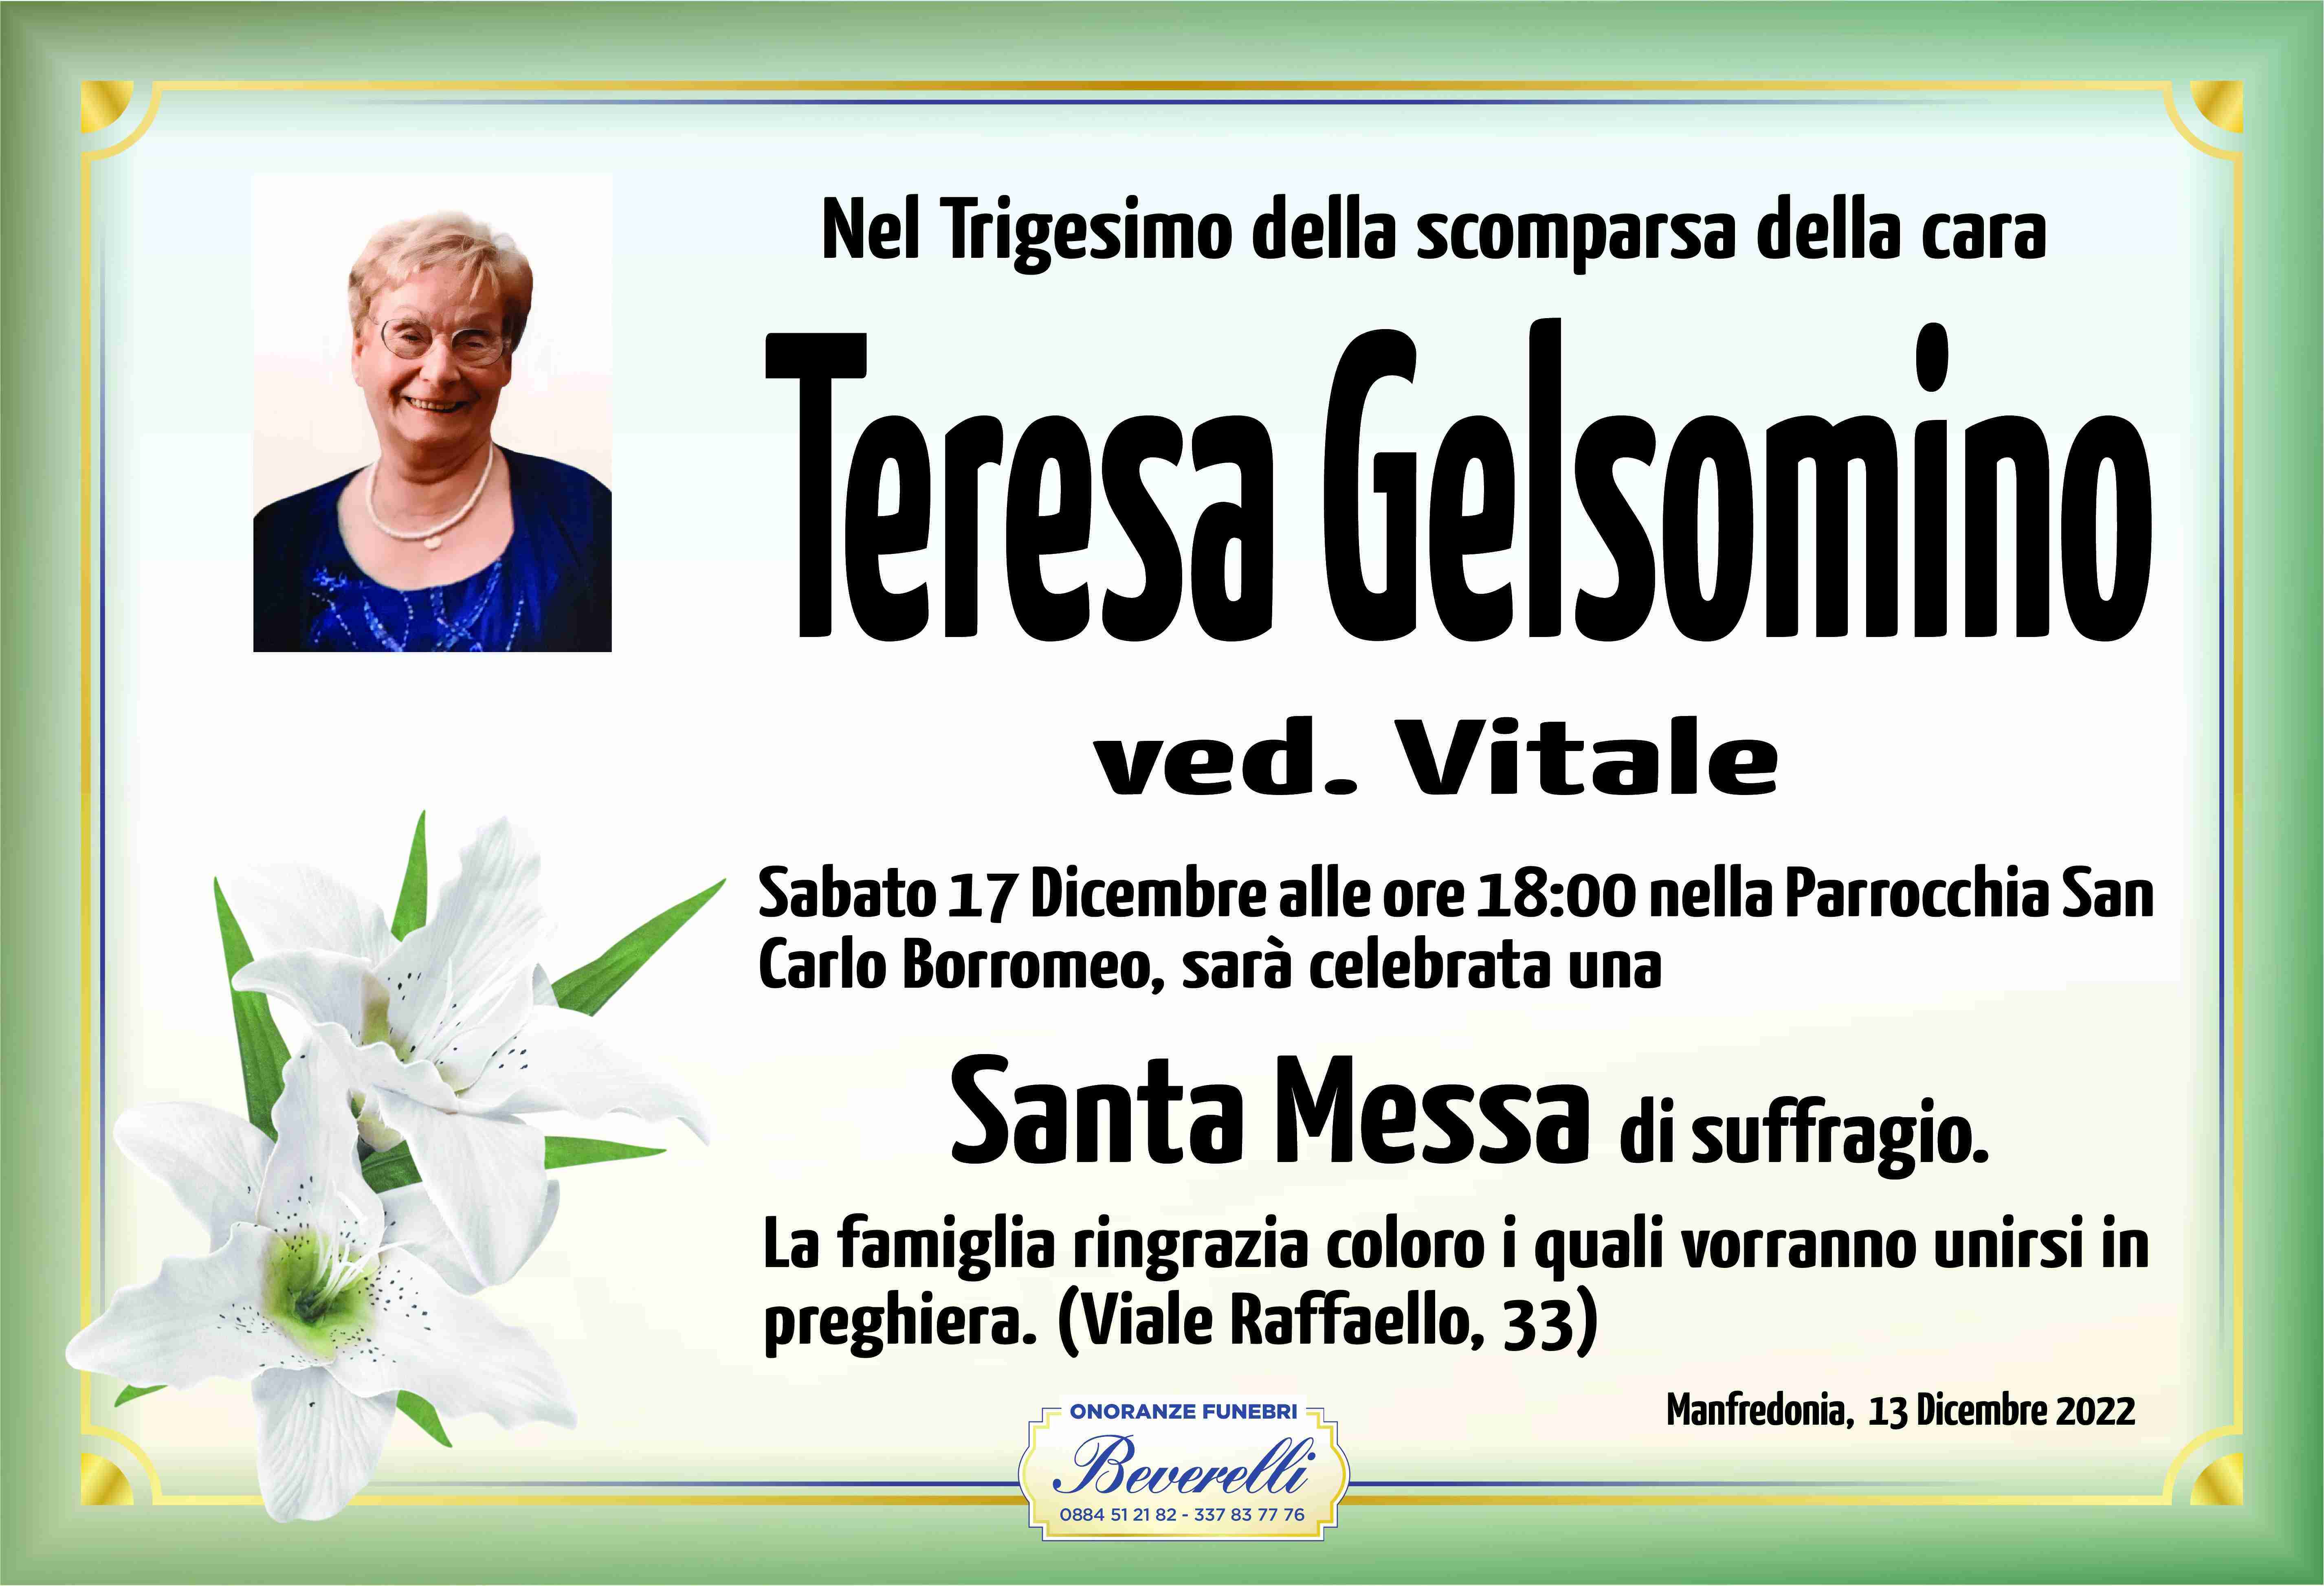 Teresa Gelsomino